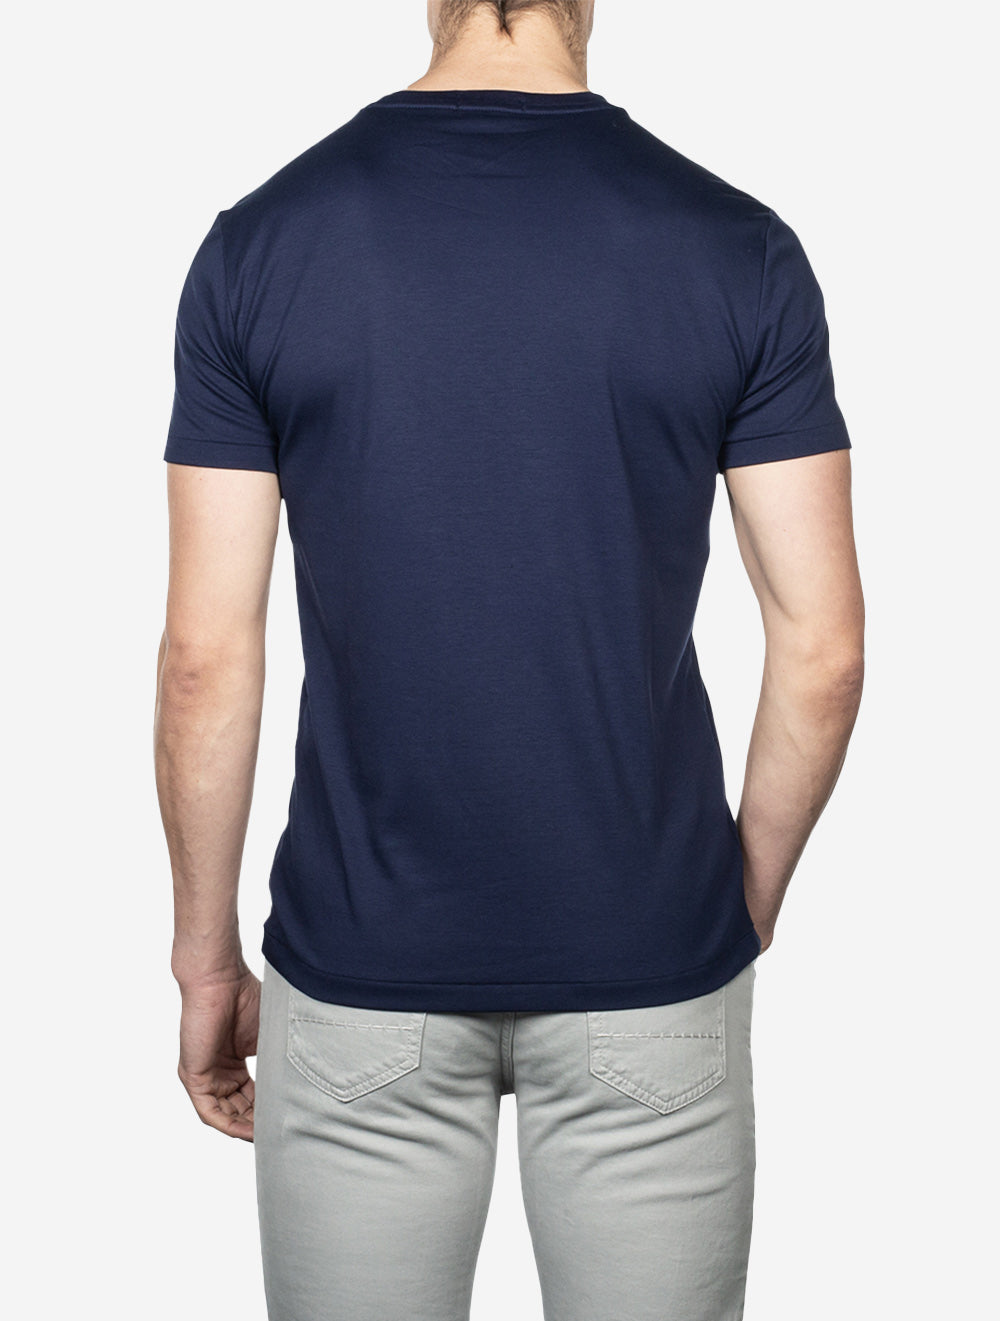 Pima Short Sleeve T-Shirt Cruise Navy